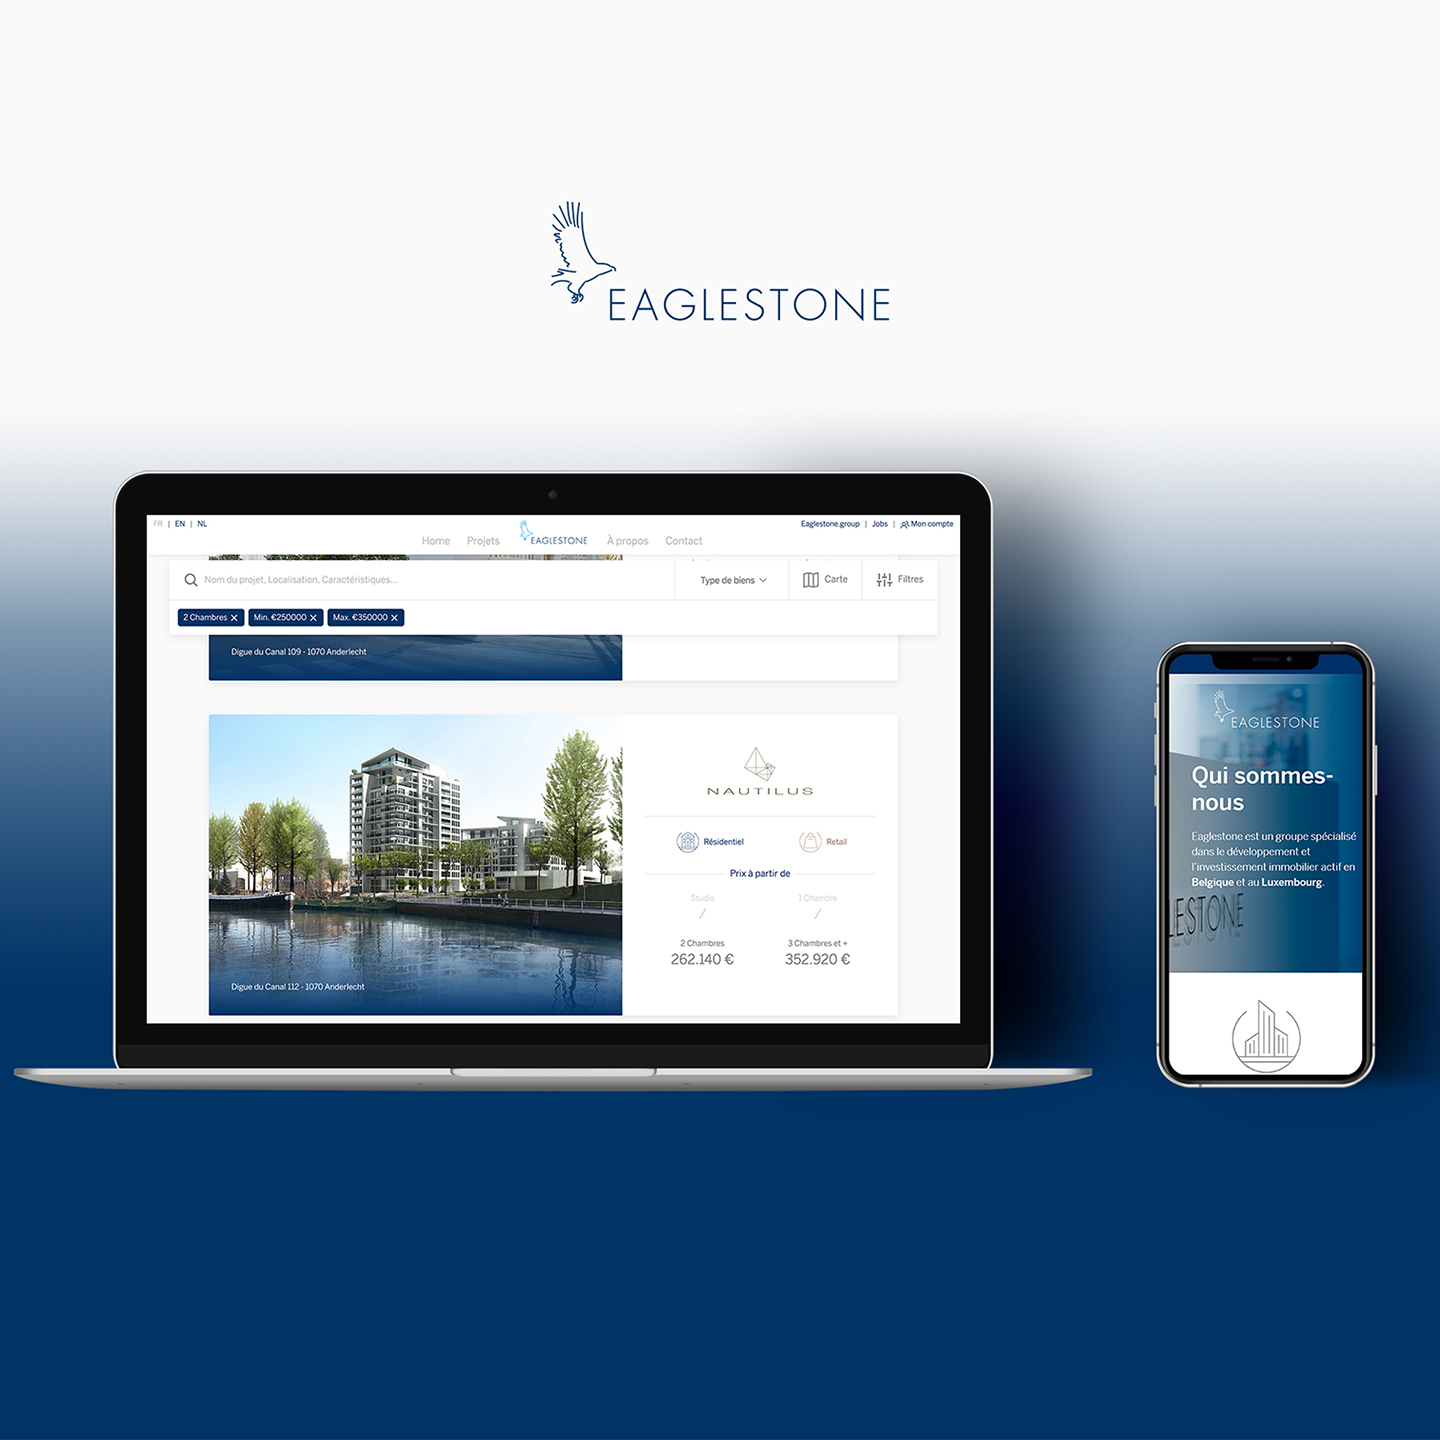 Eaglestone corporate website